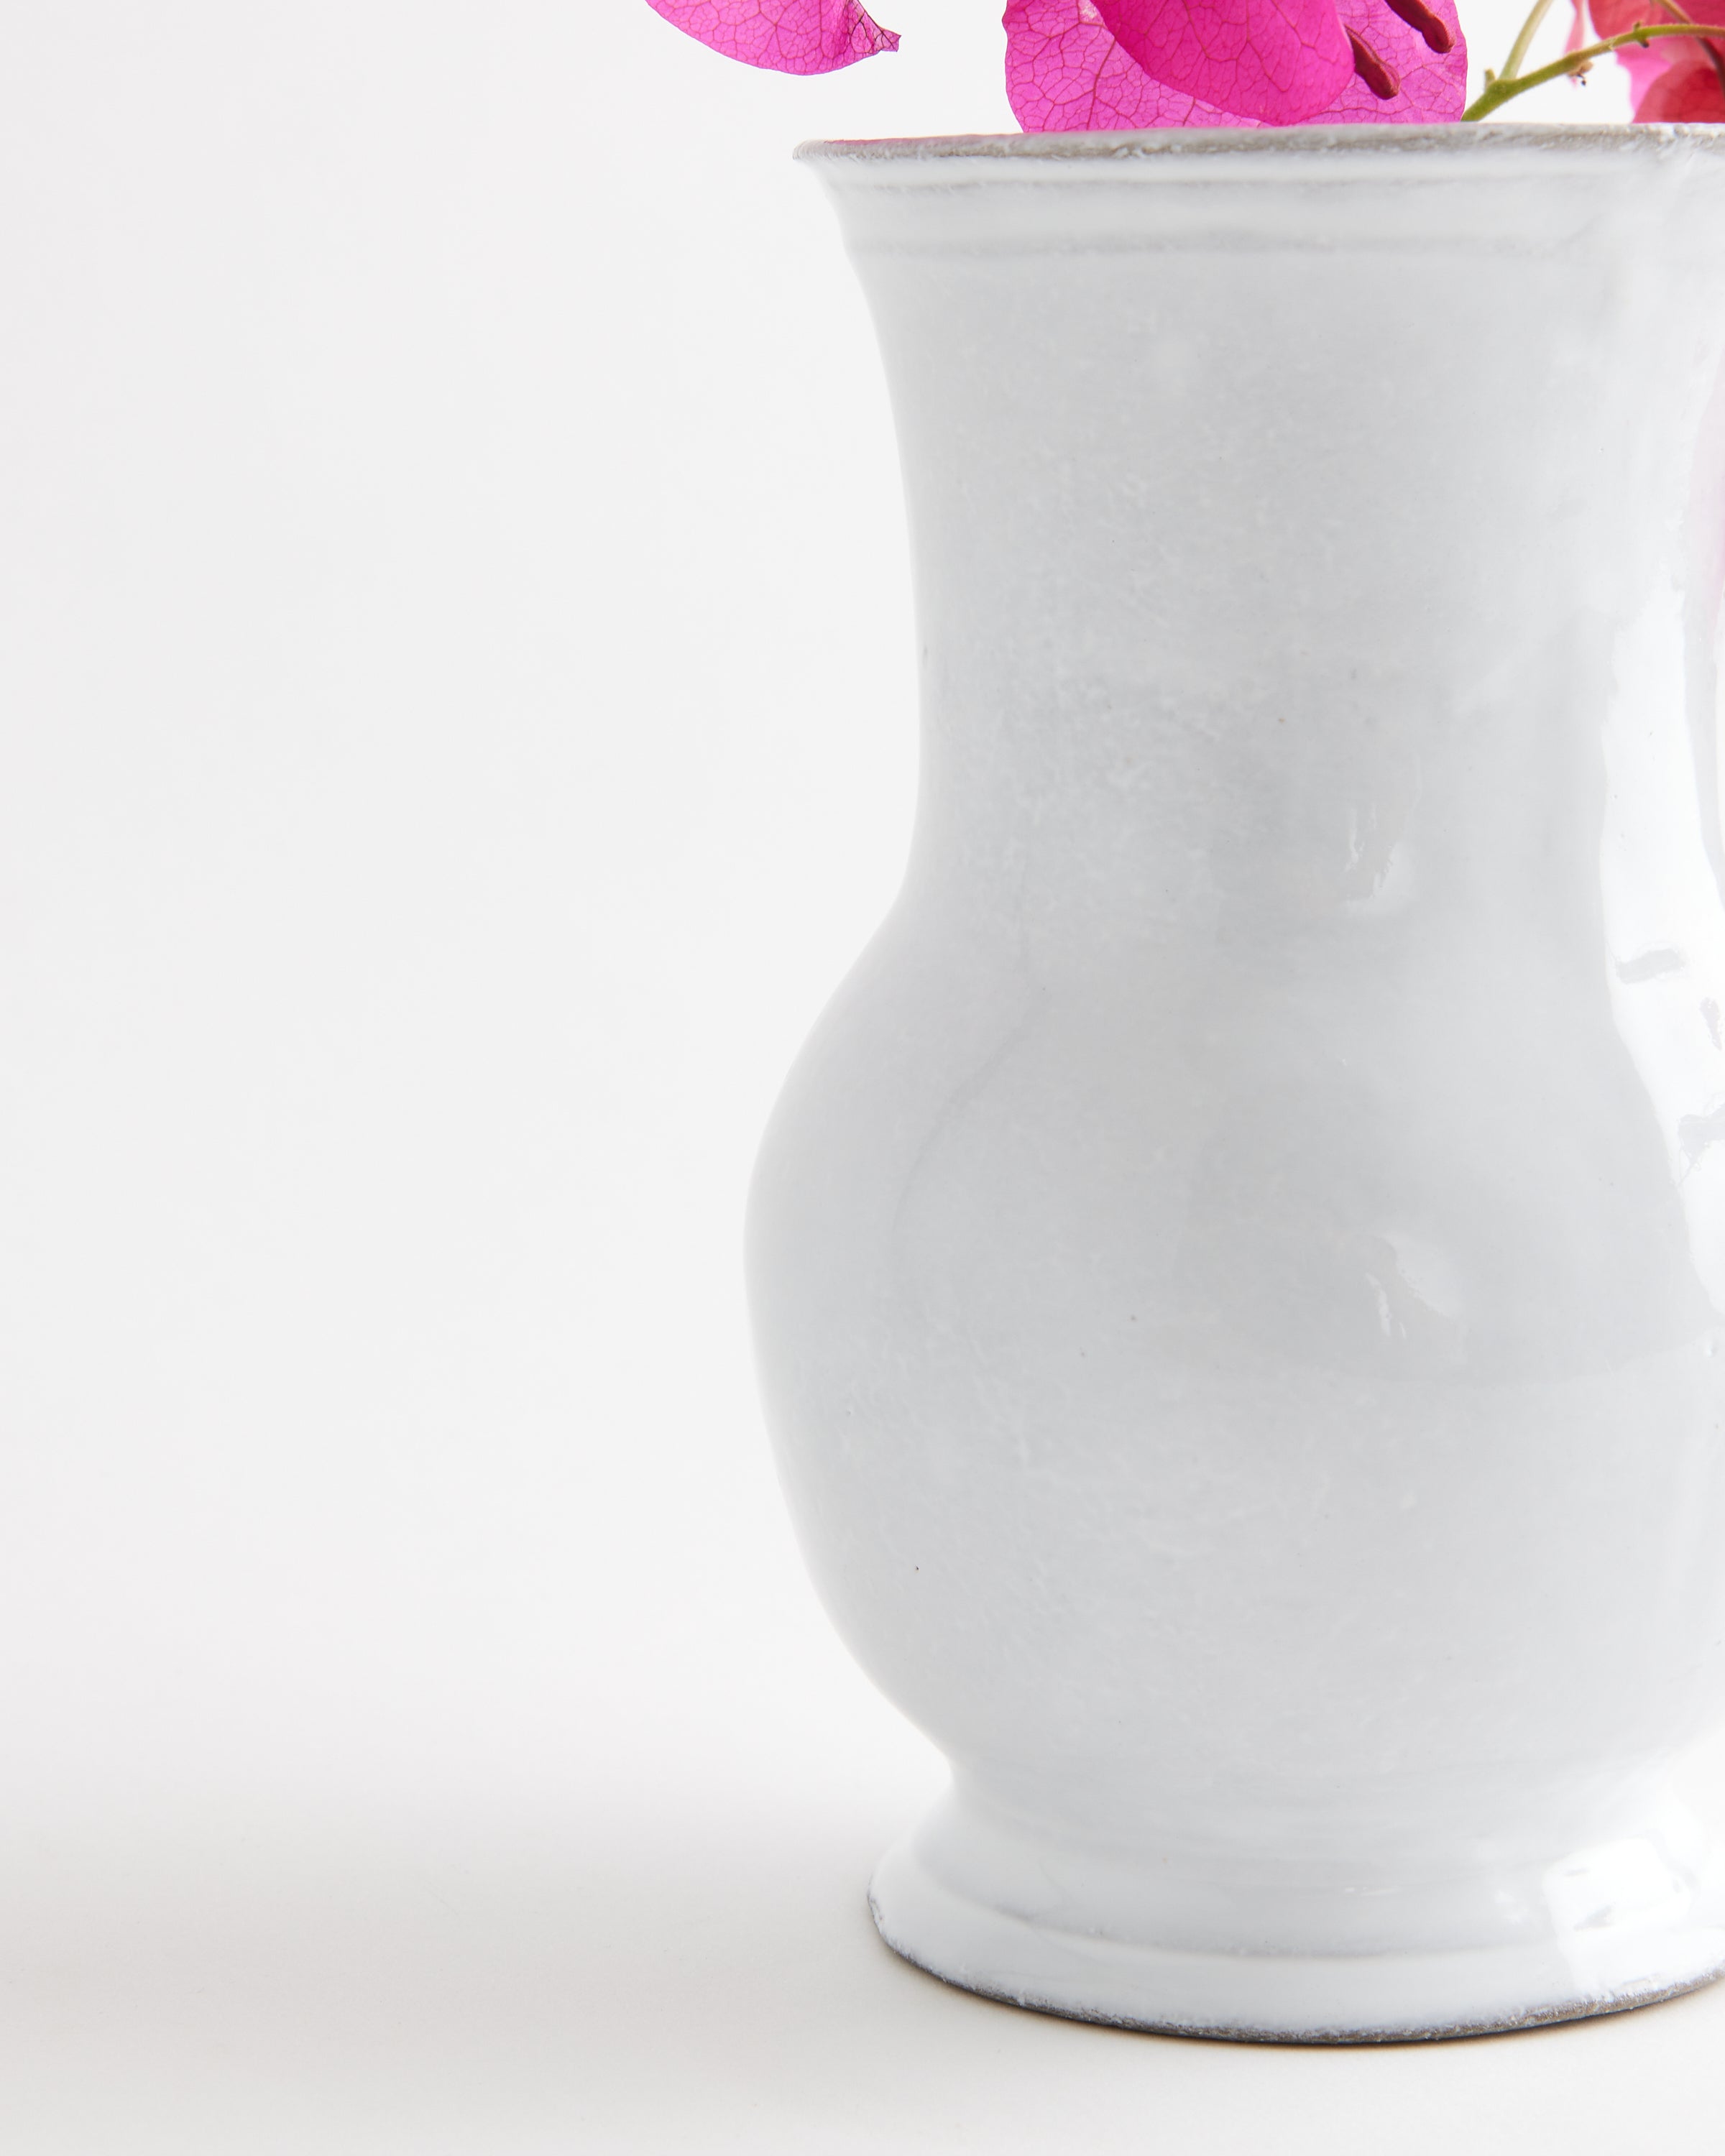 Small Colbert Vase